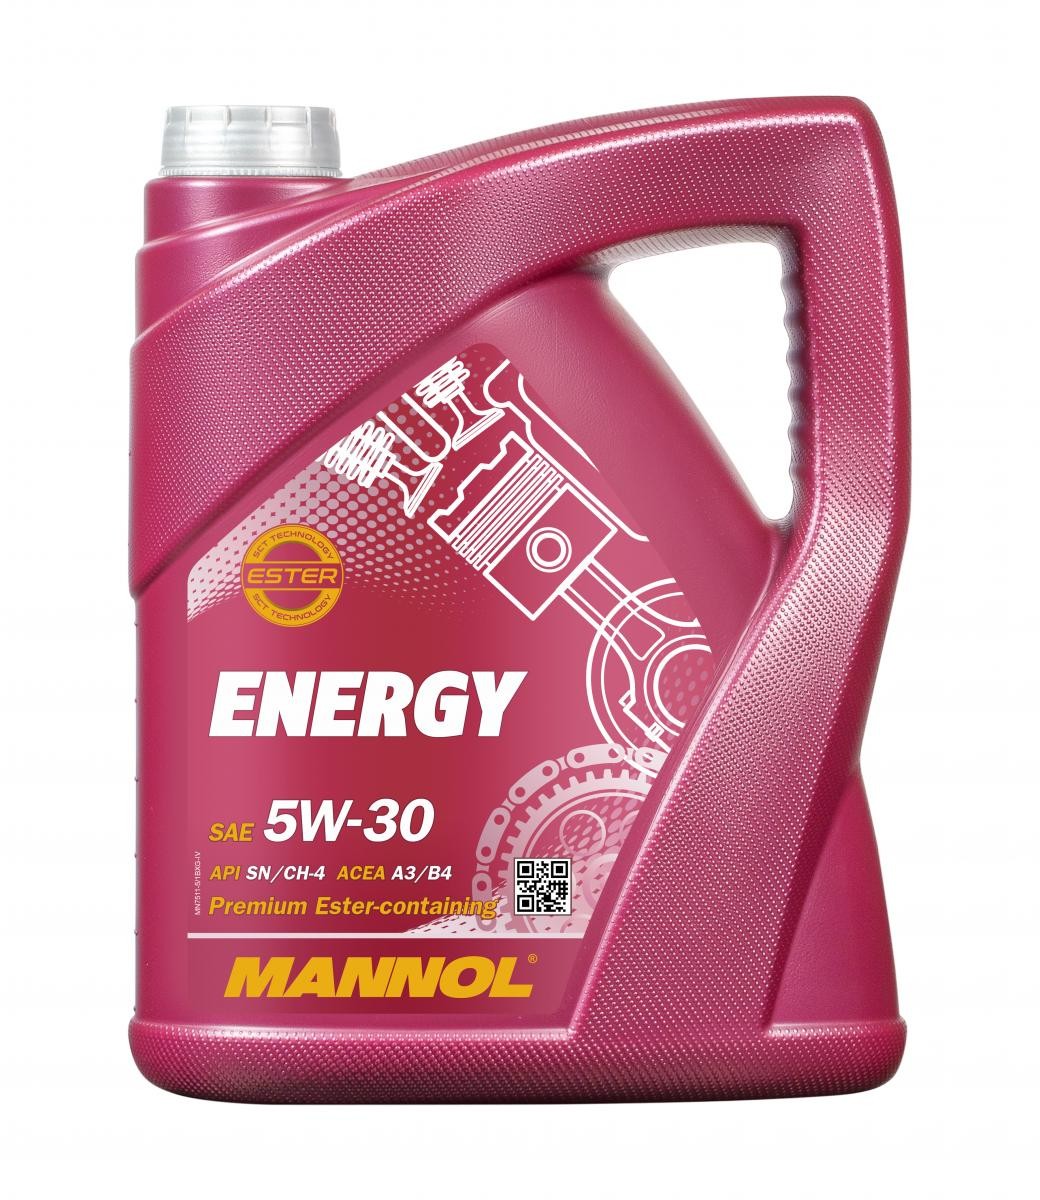 MANNOL ENERGY 5W-30, 5L, aceite parcialmente sintético Aceite para motor MN7511-5 comprar online